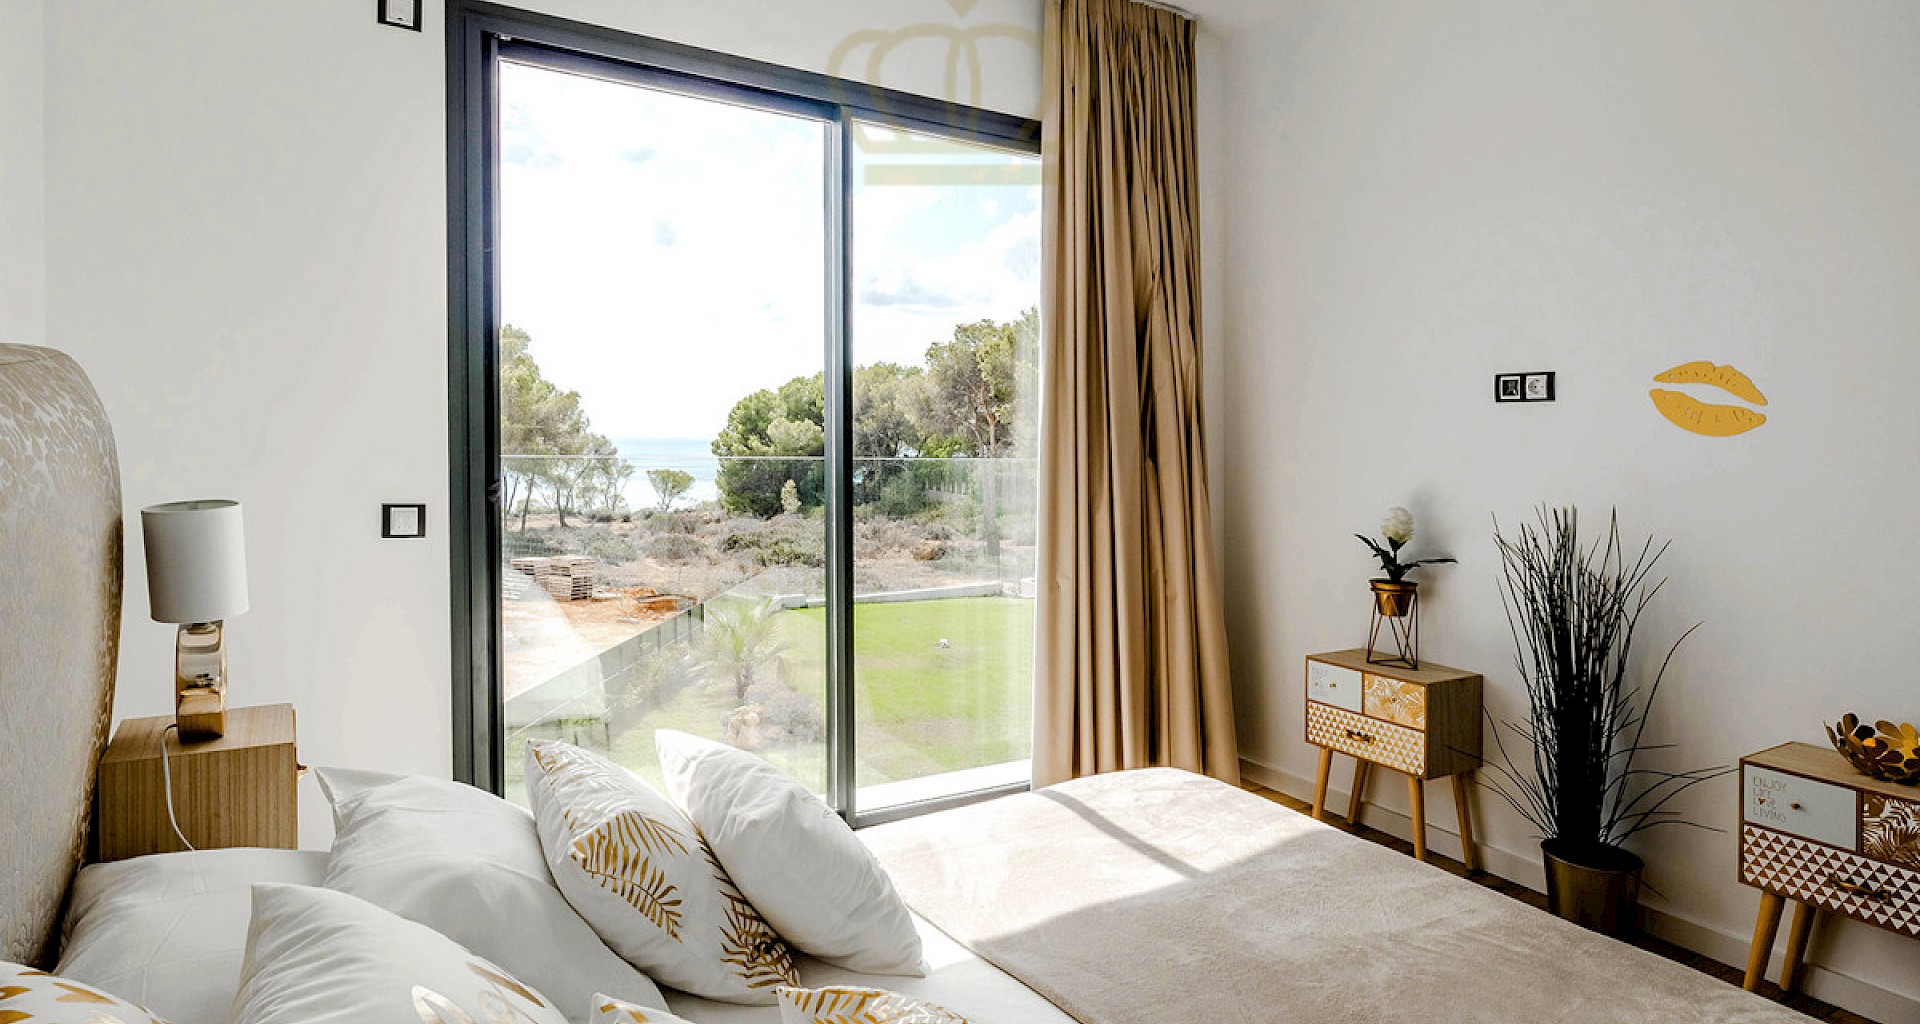 KROHN & LUEDEMANN Modern top villa in Puig de Ros with garden and sea views 